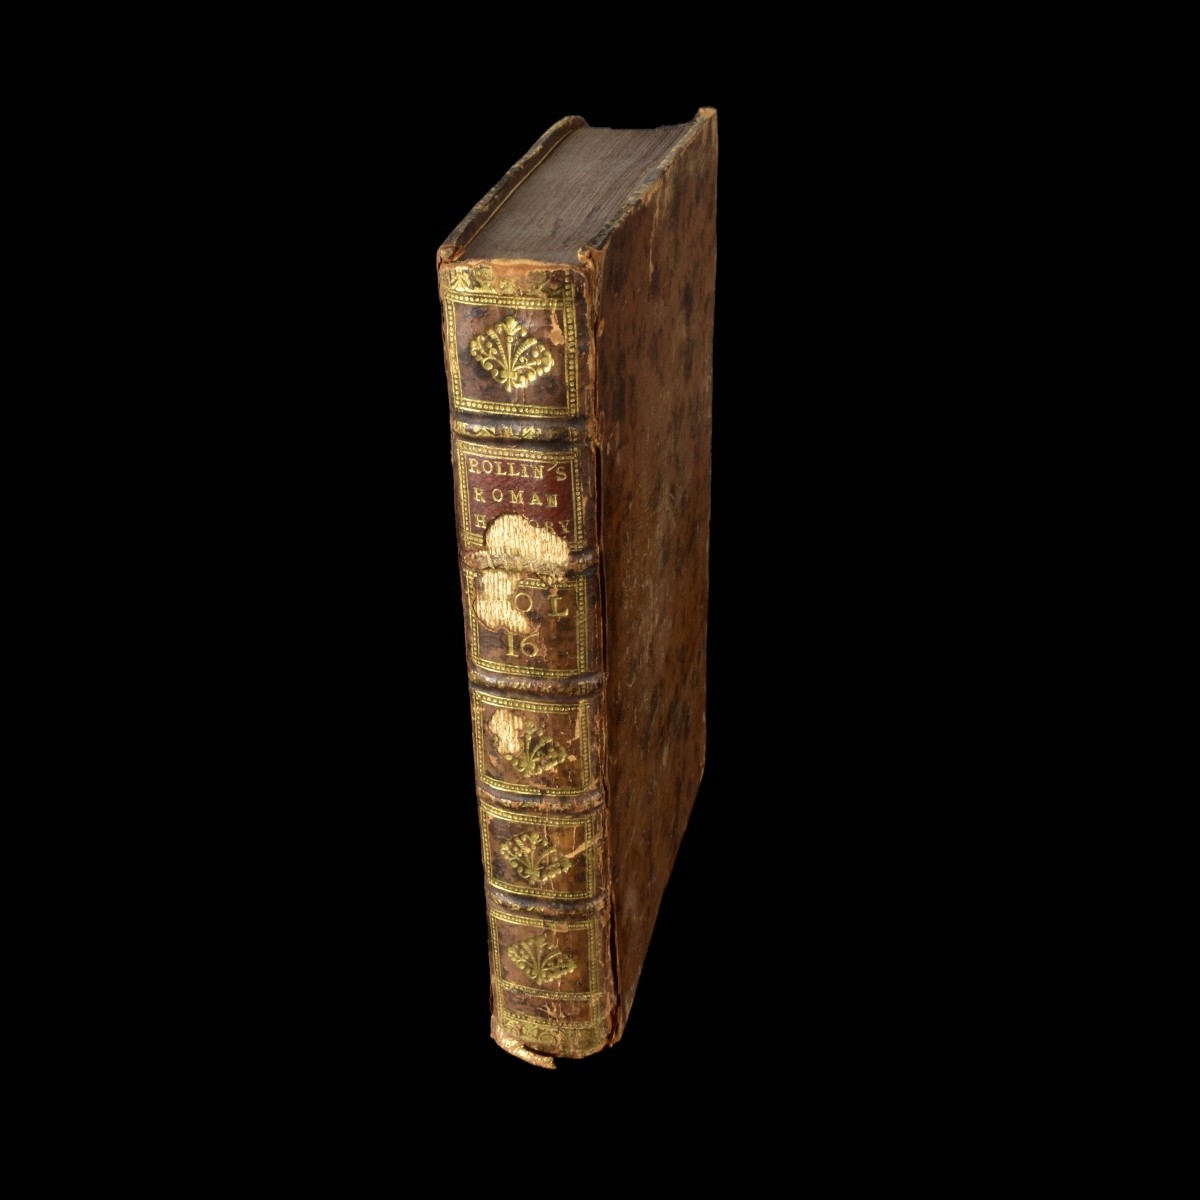 10 Volumes of Rollin's Roman History Books